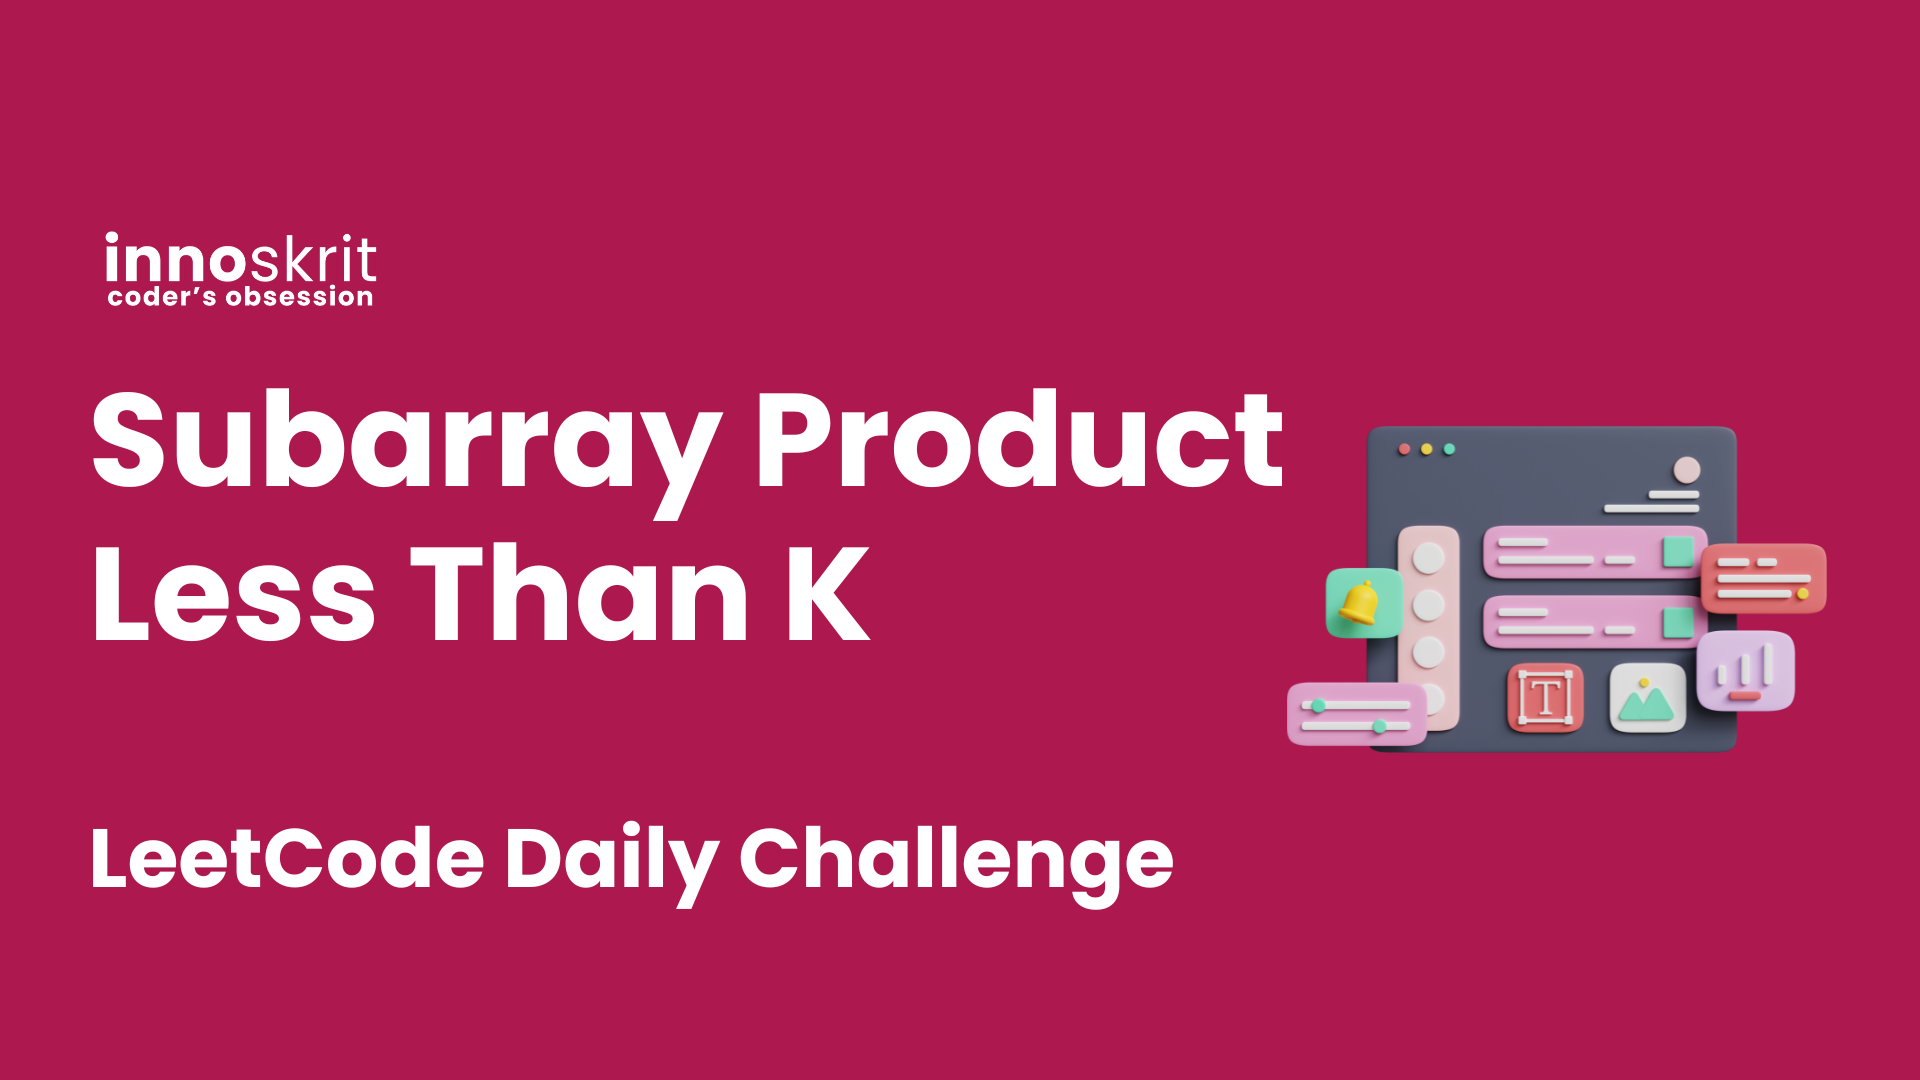 Subarray Product Less Than K